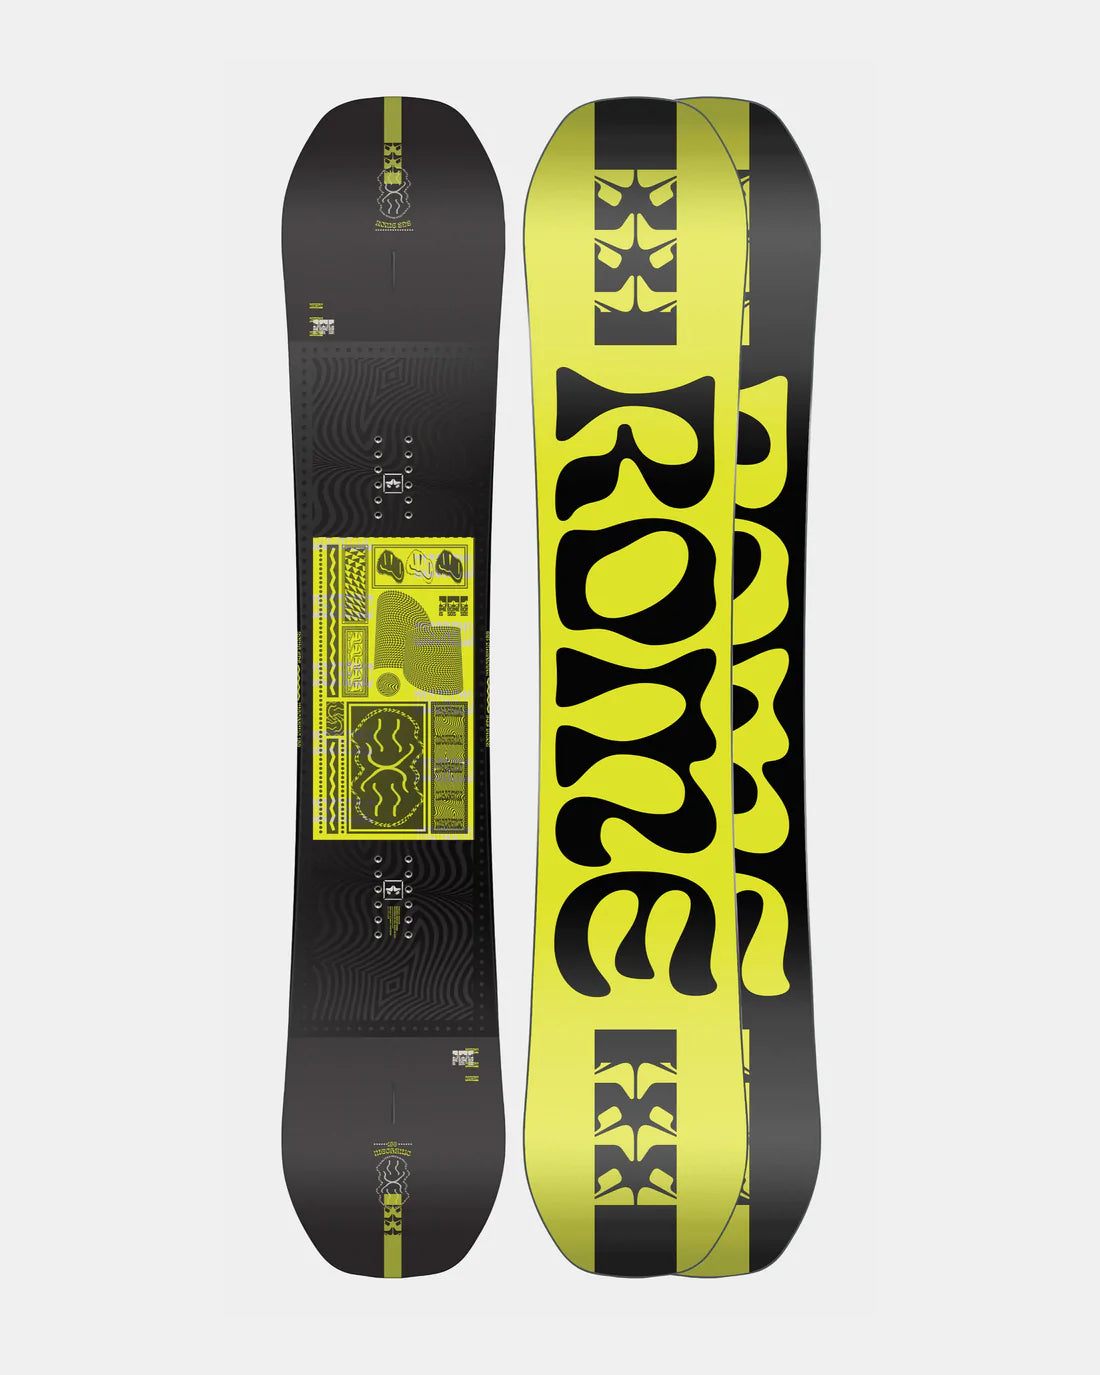 Rome Mechanic Snowboard. Black with yellow design, Rome Logo on the bottom